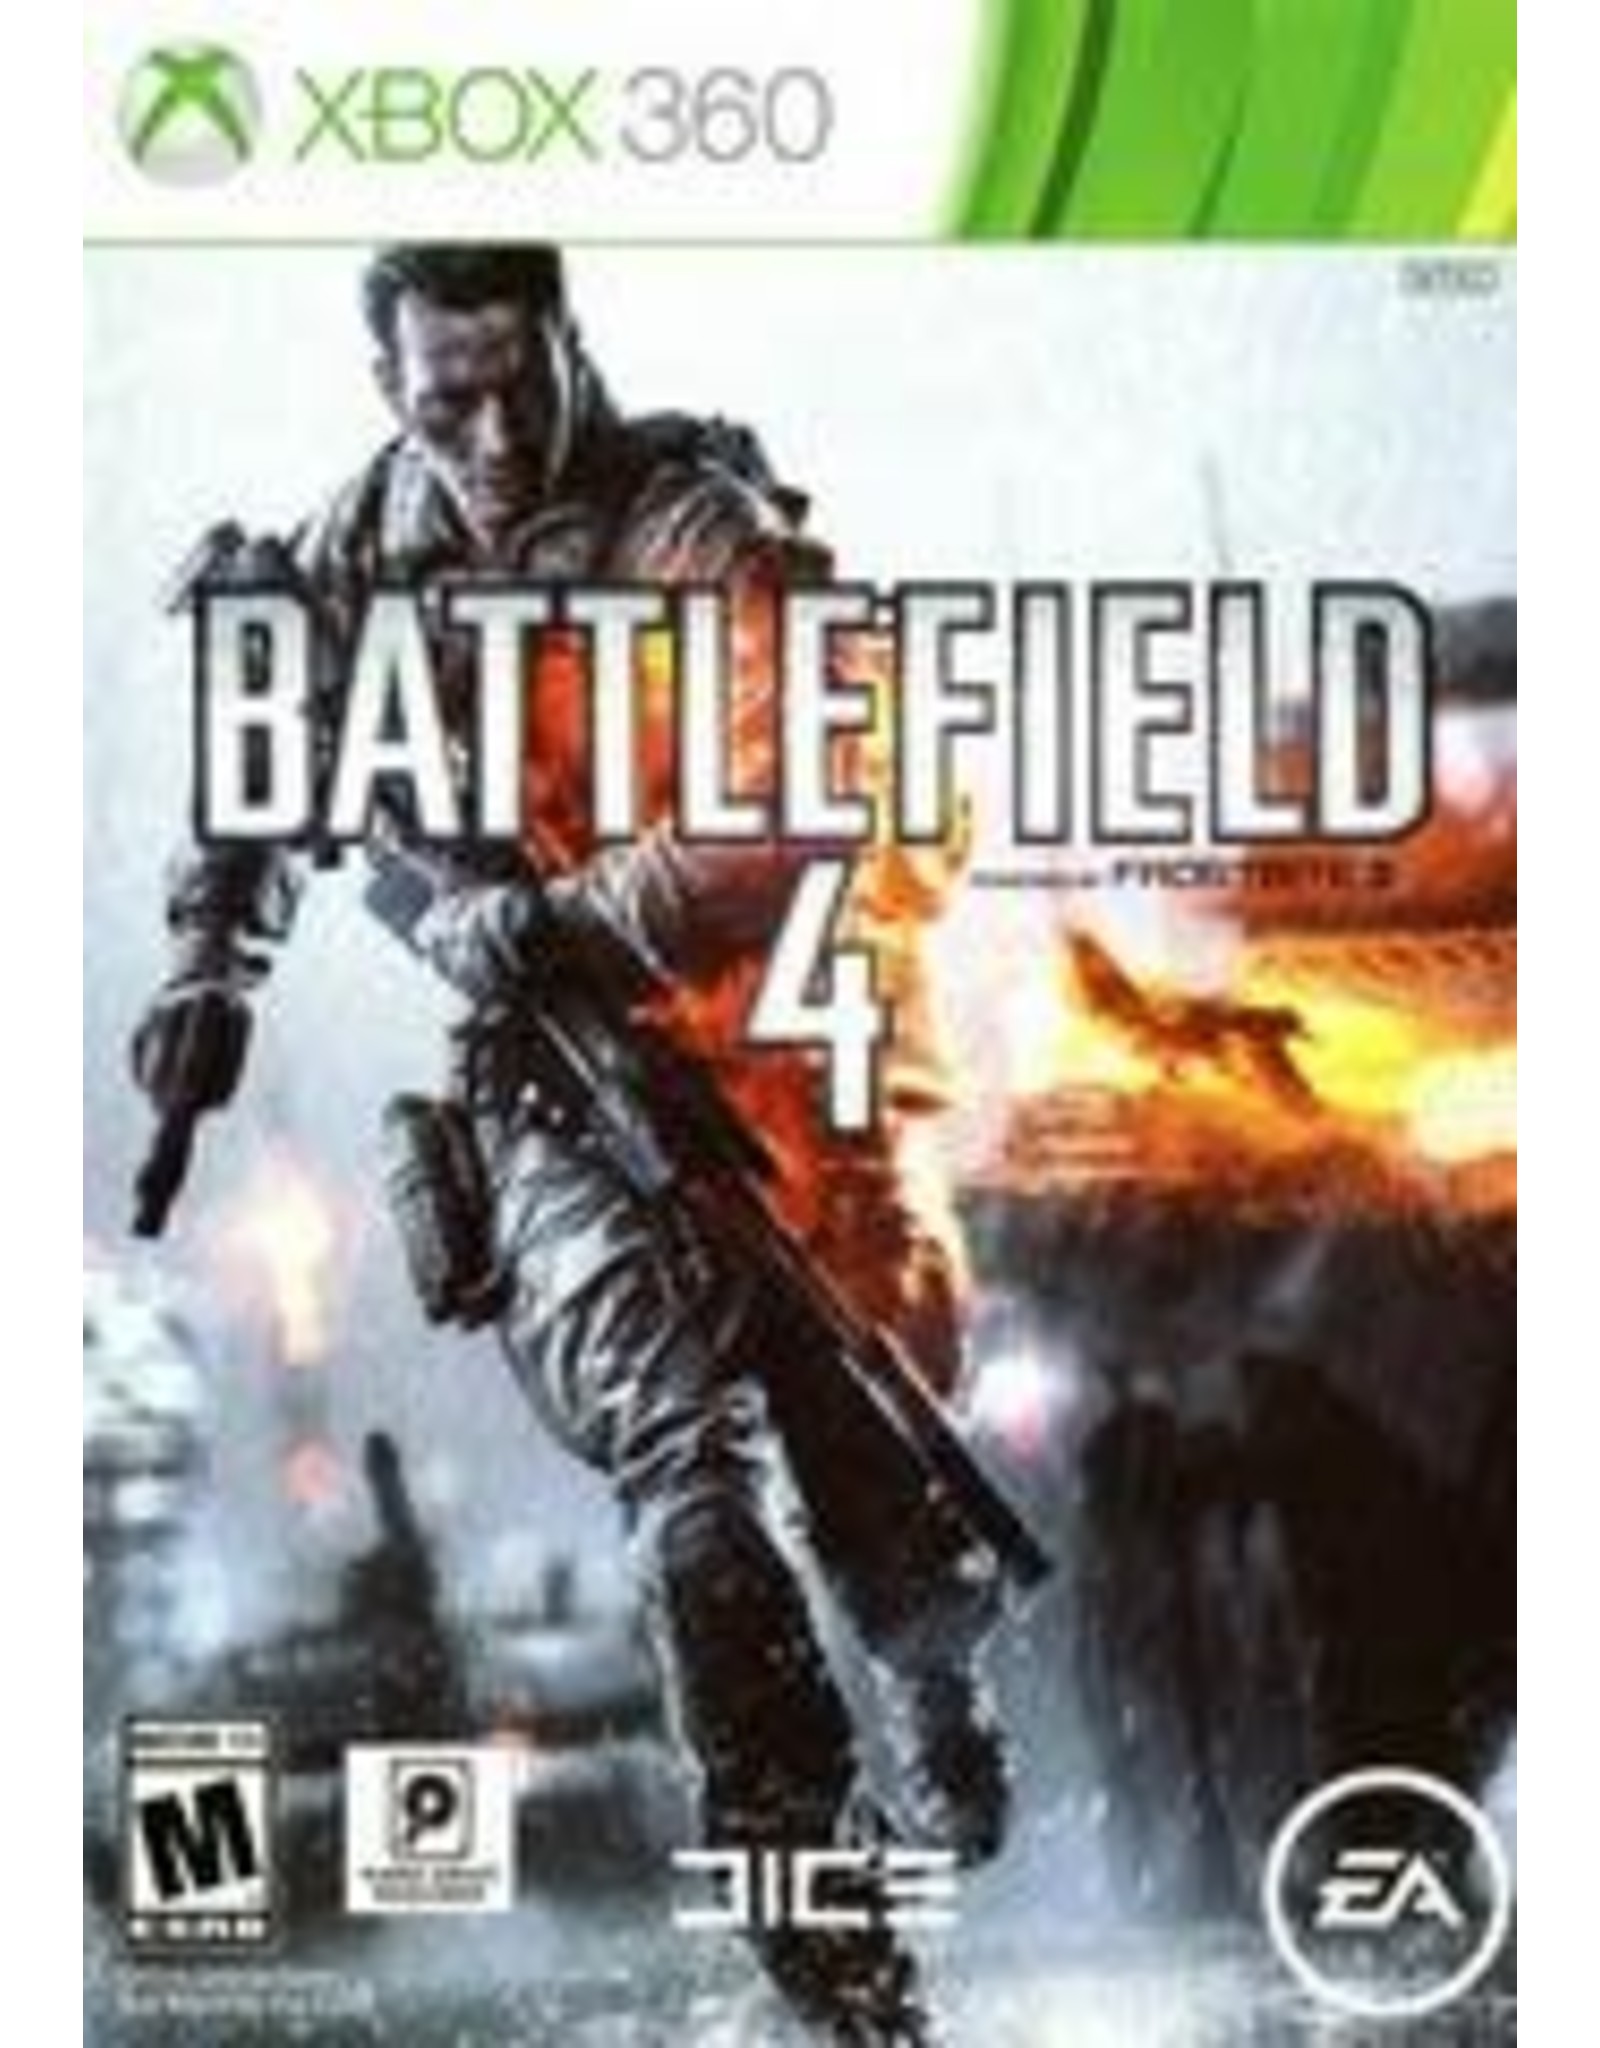 Xbox 360 Battlefield 4 (No Manual)